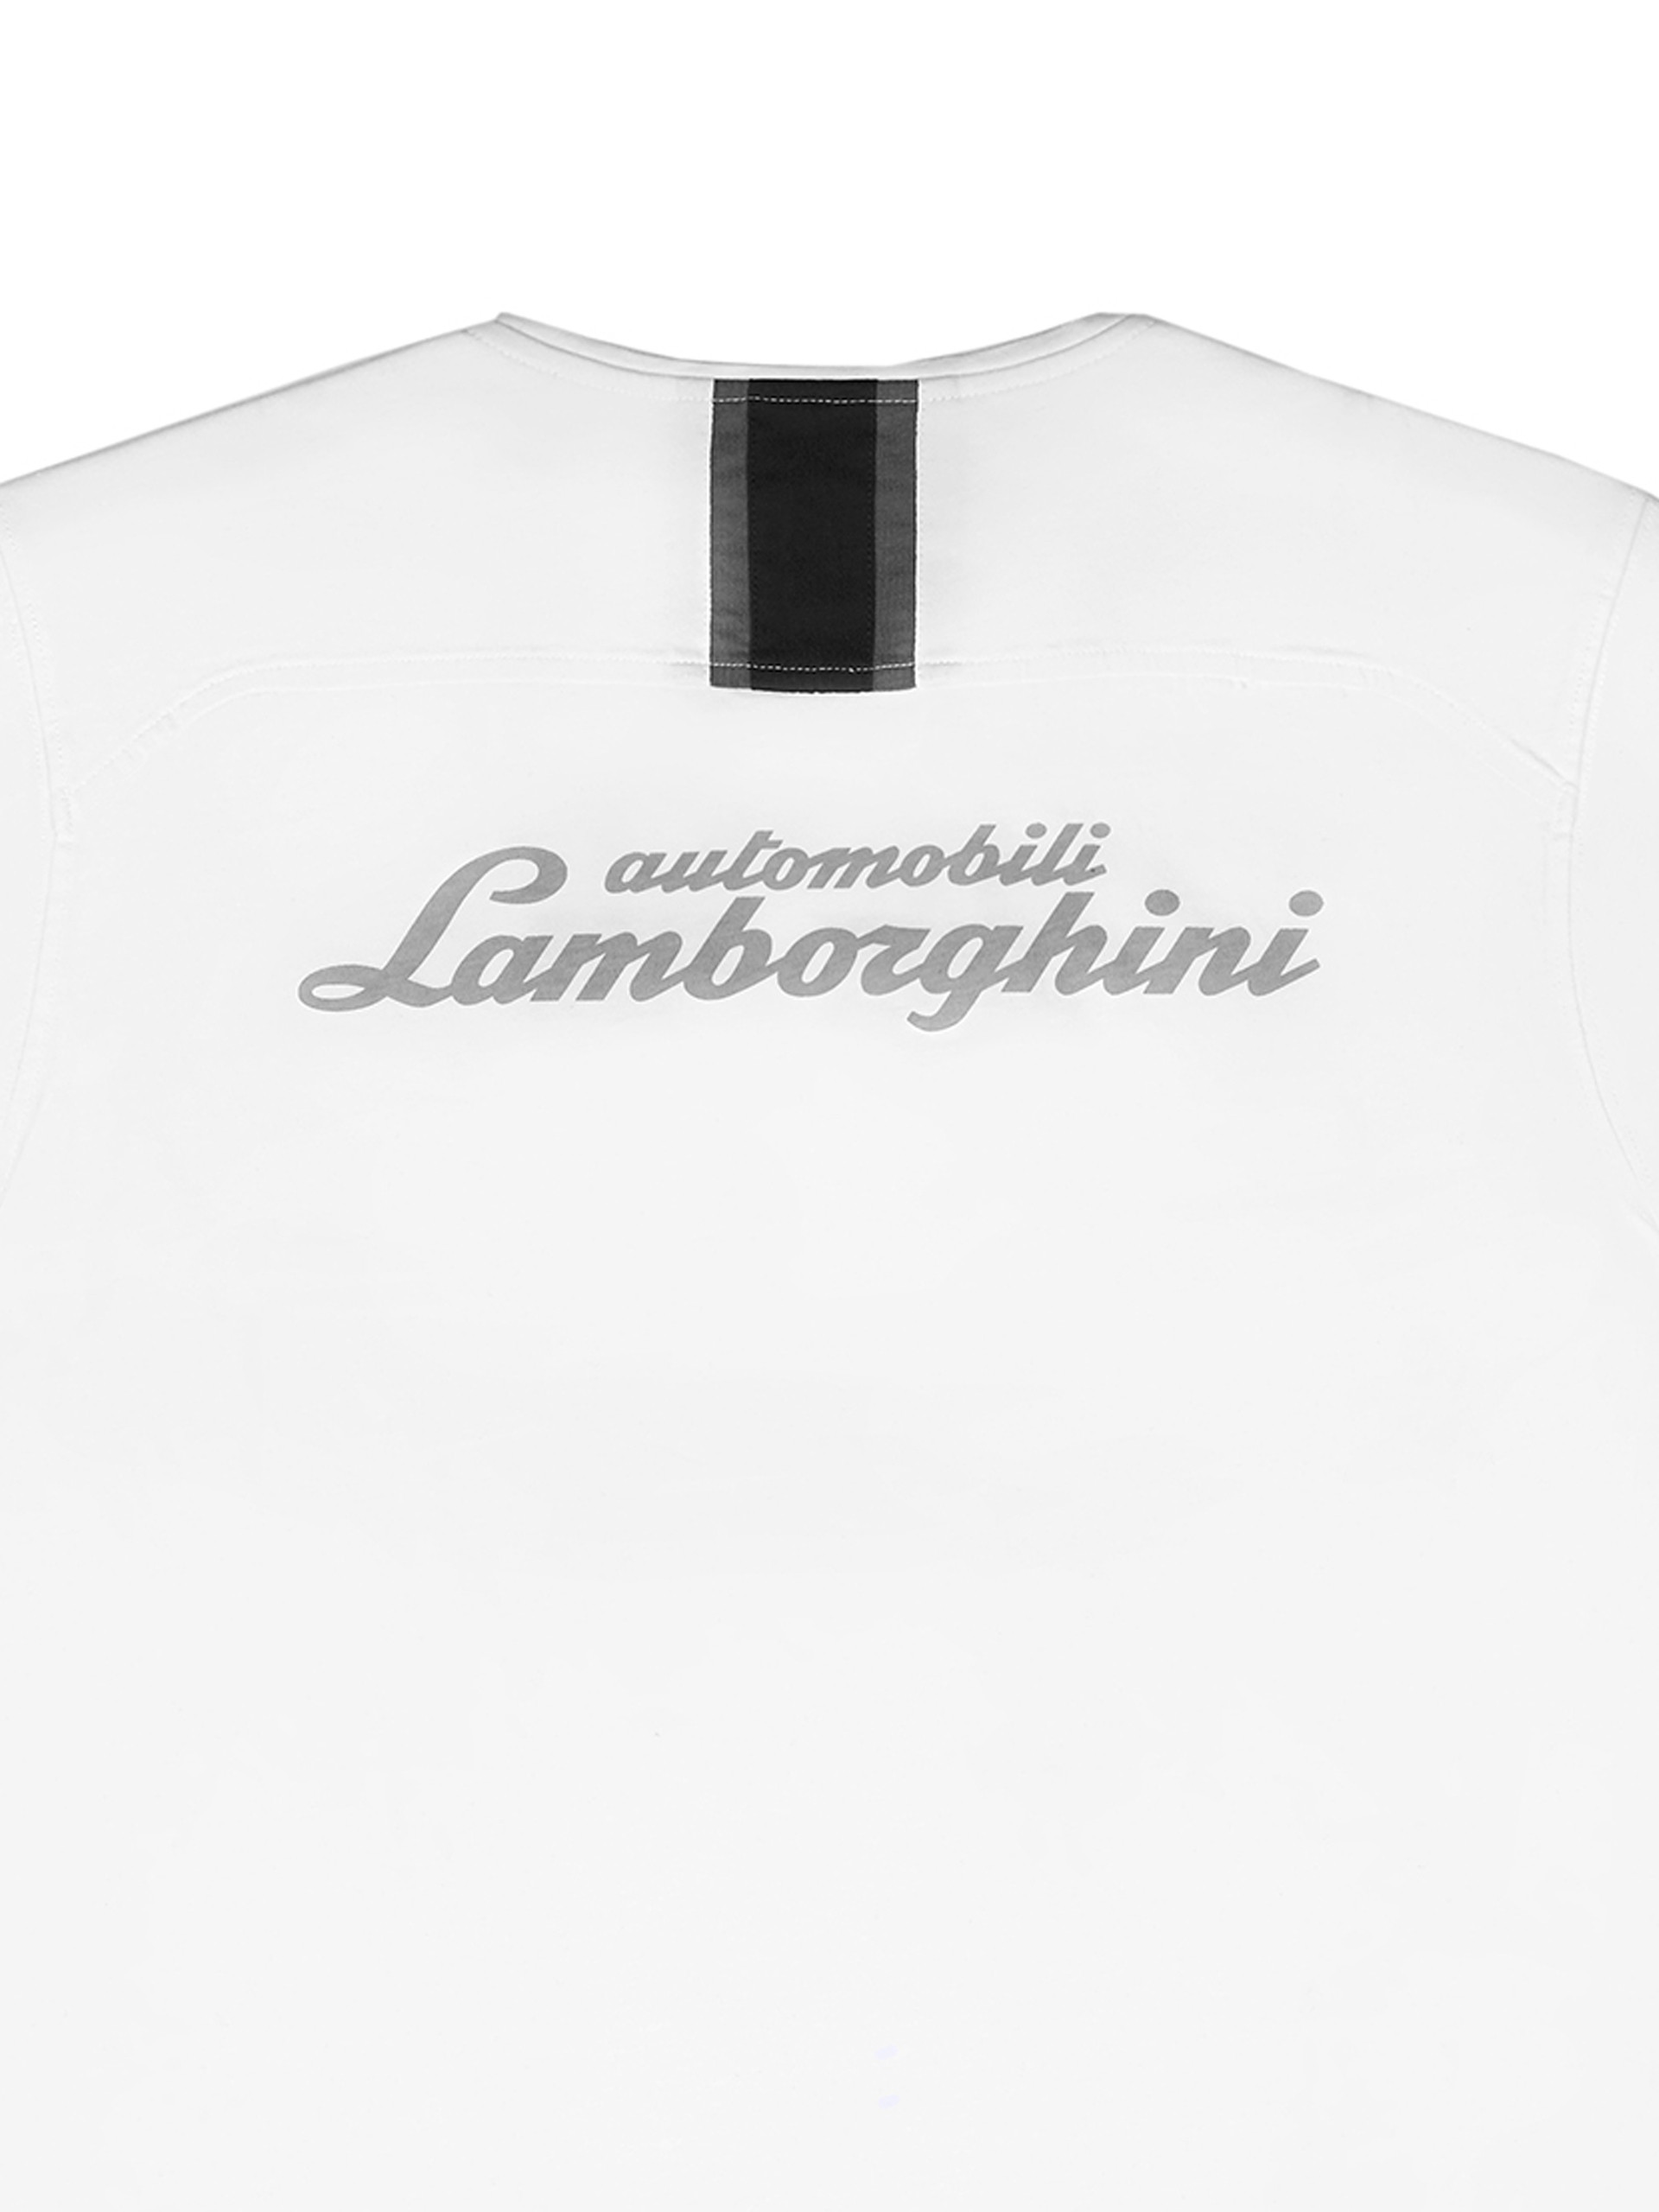 LCA Store | Lamborghini Pilota Ufficiale 1963 t-shirt - Lamborghini ...